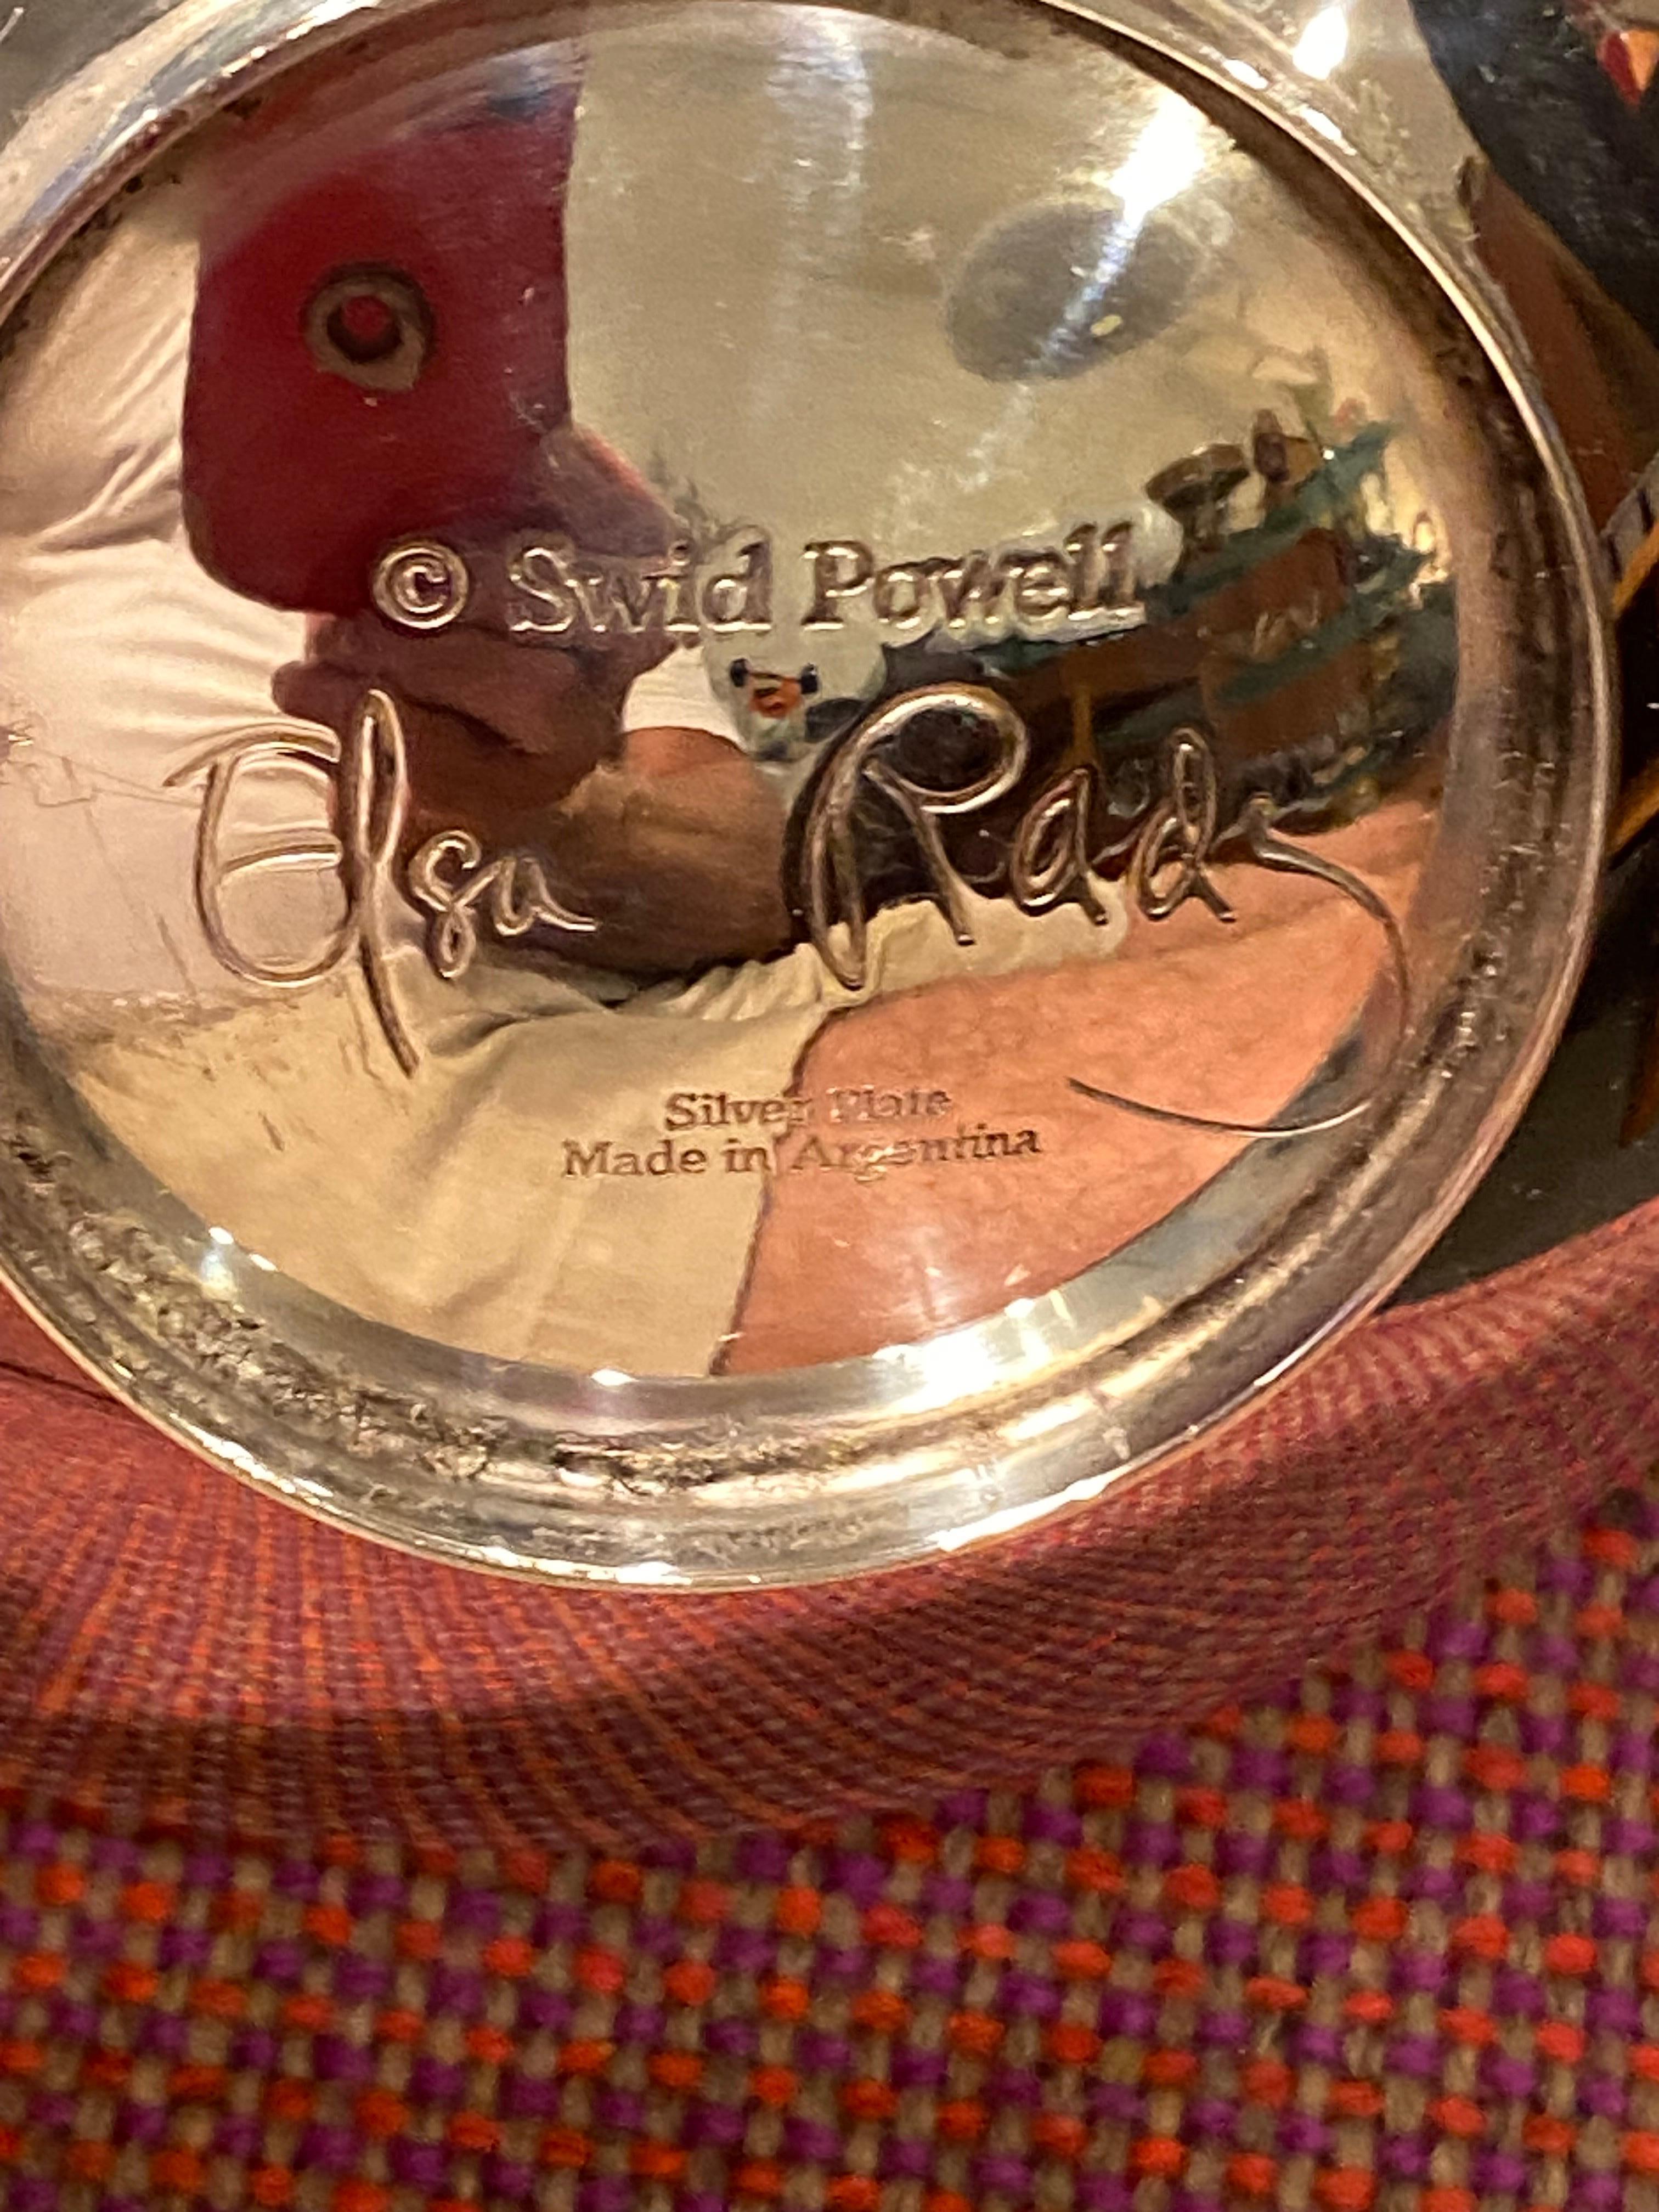 Swid Powell Silver Plate Bowl by Elsa Rady 2